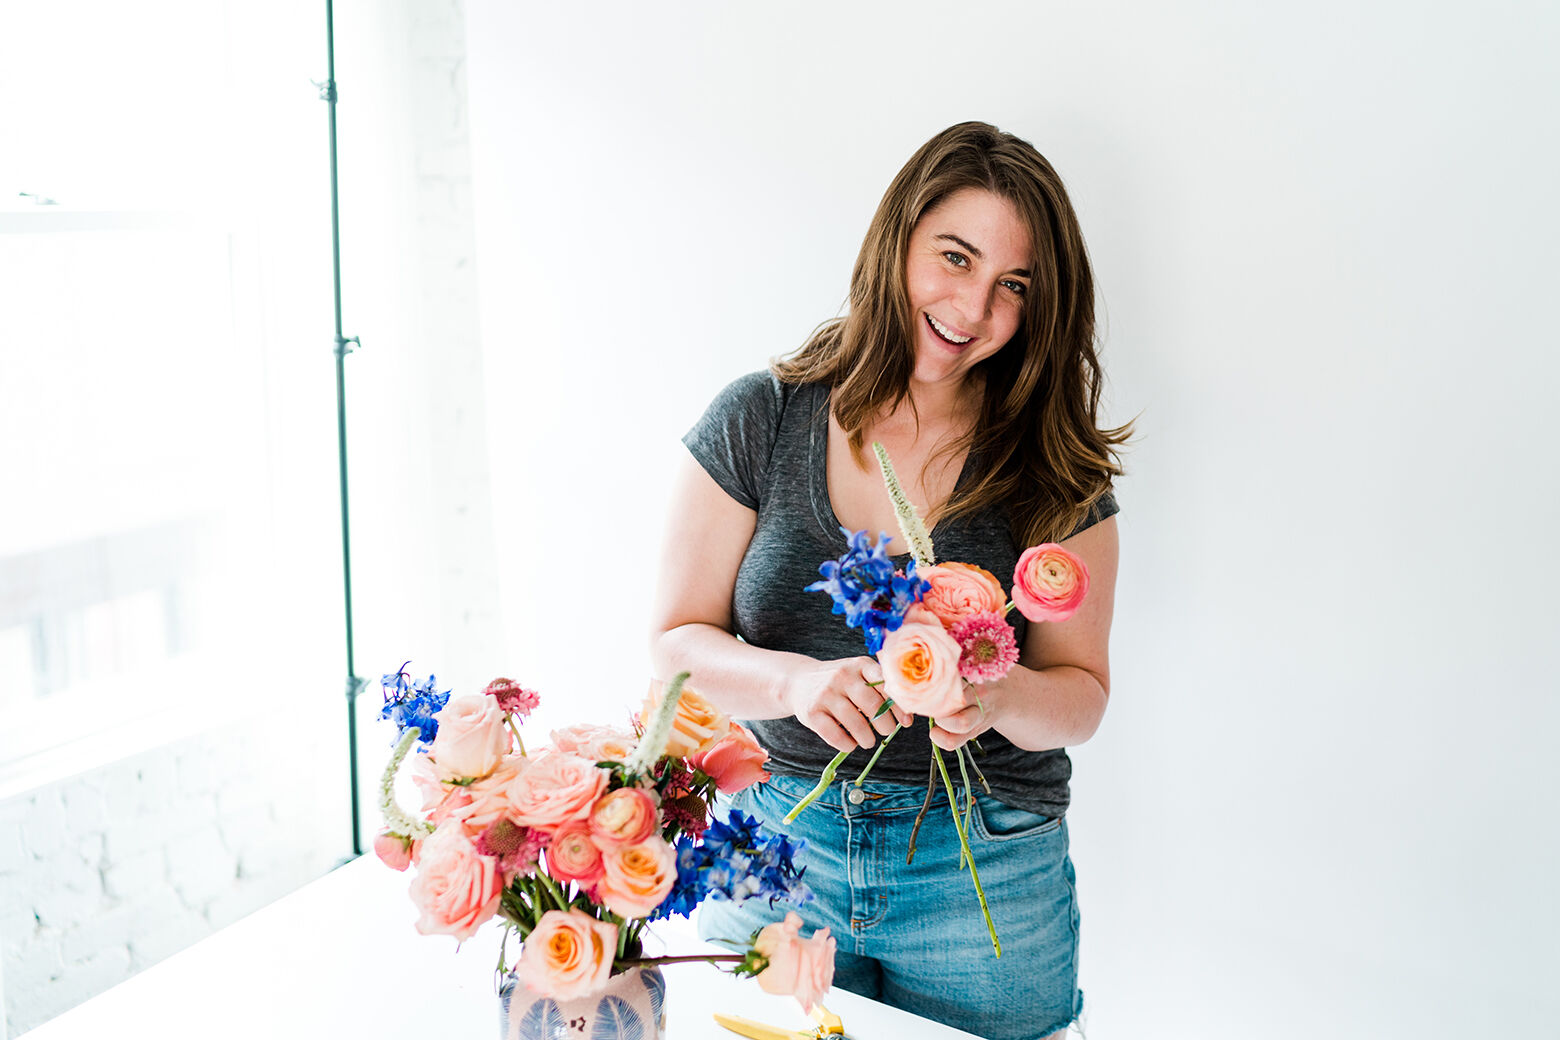 DC wedding flower startup Poppy raises $1.7 million